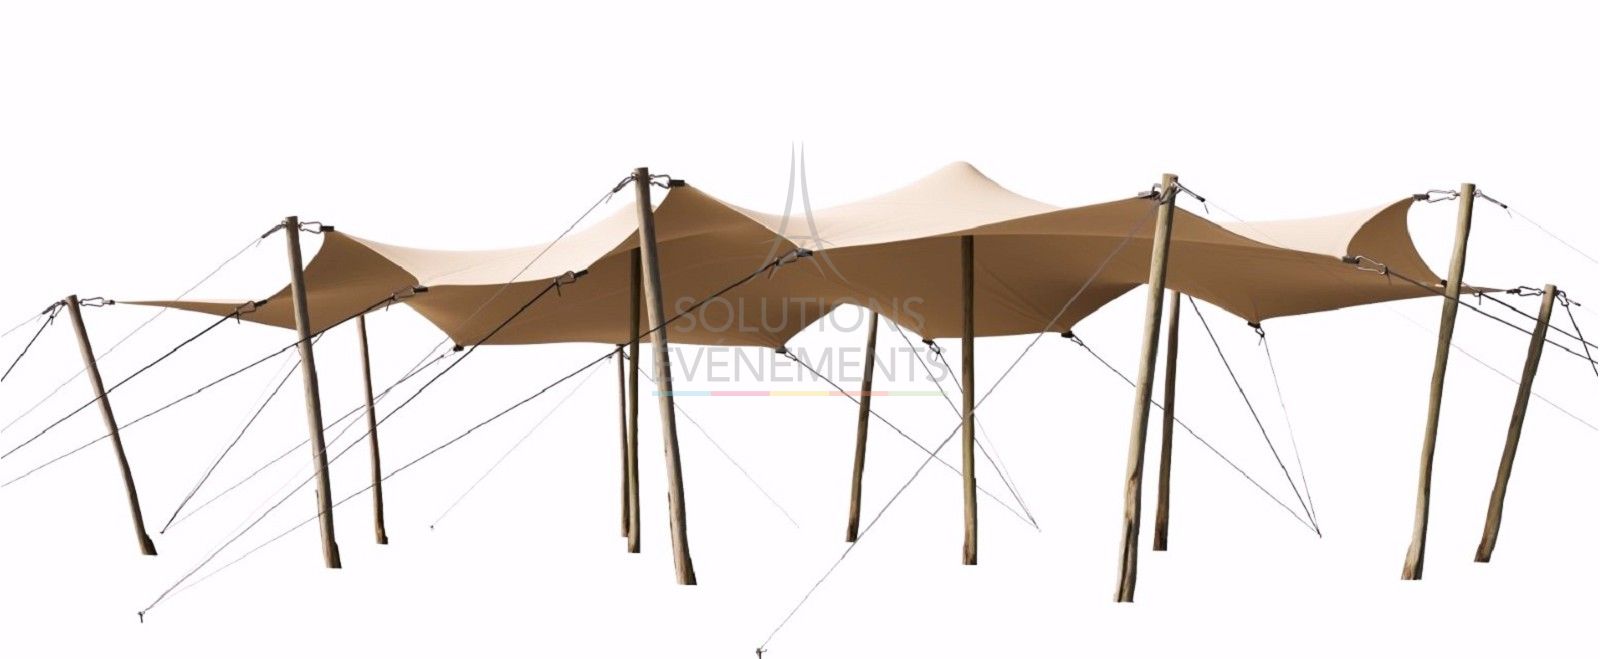 7.5x10m stretch tent rental